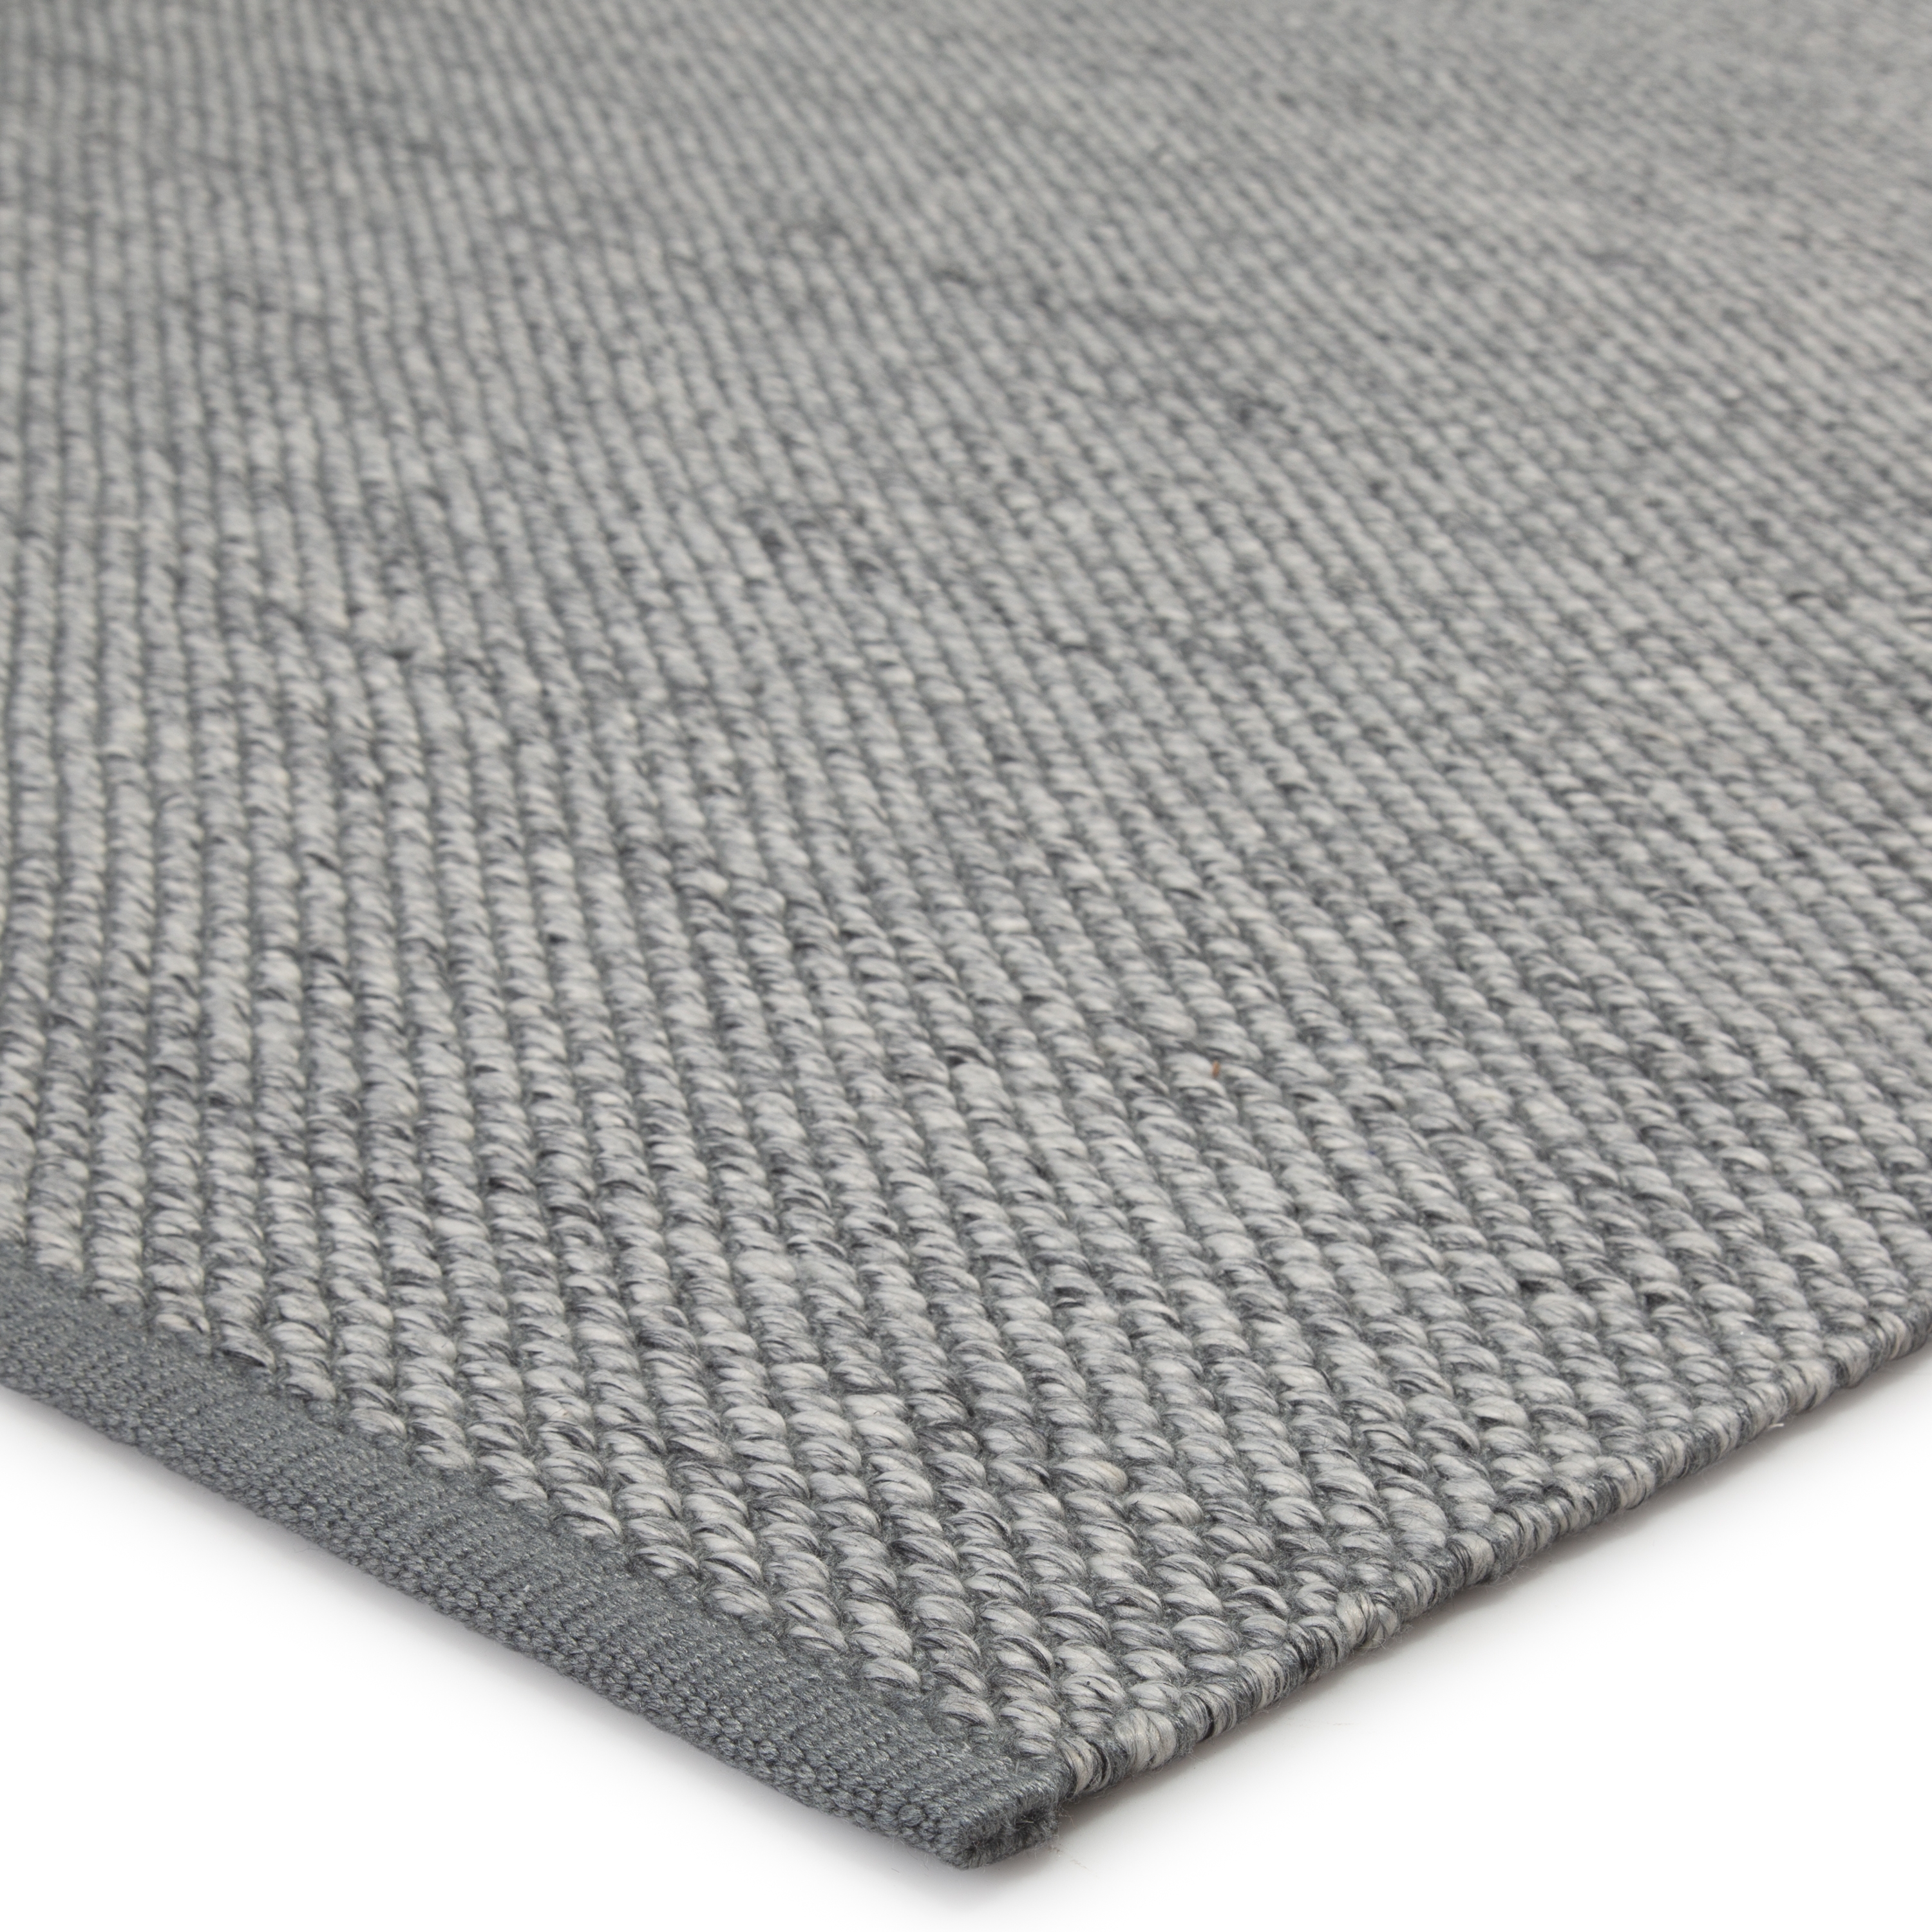 Lamanda Indoor/ Outdoor Solid Gray/ Ivory Area Rug (8'X10') - Image 1